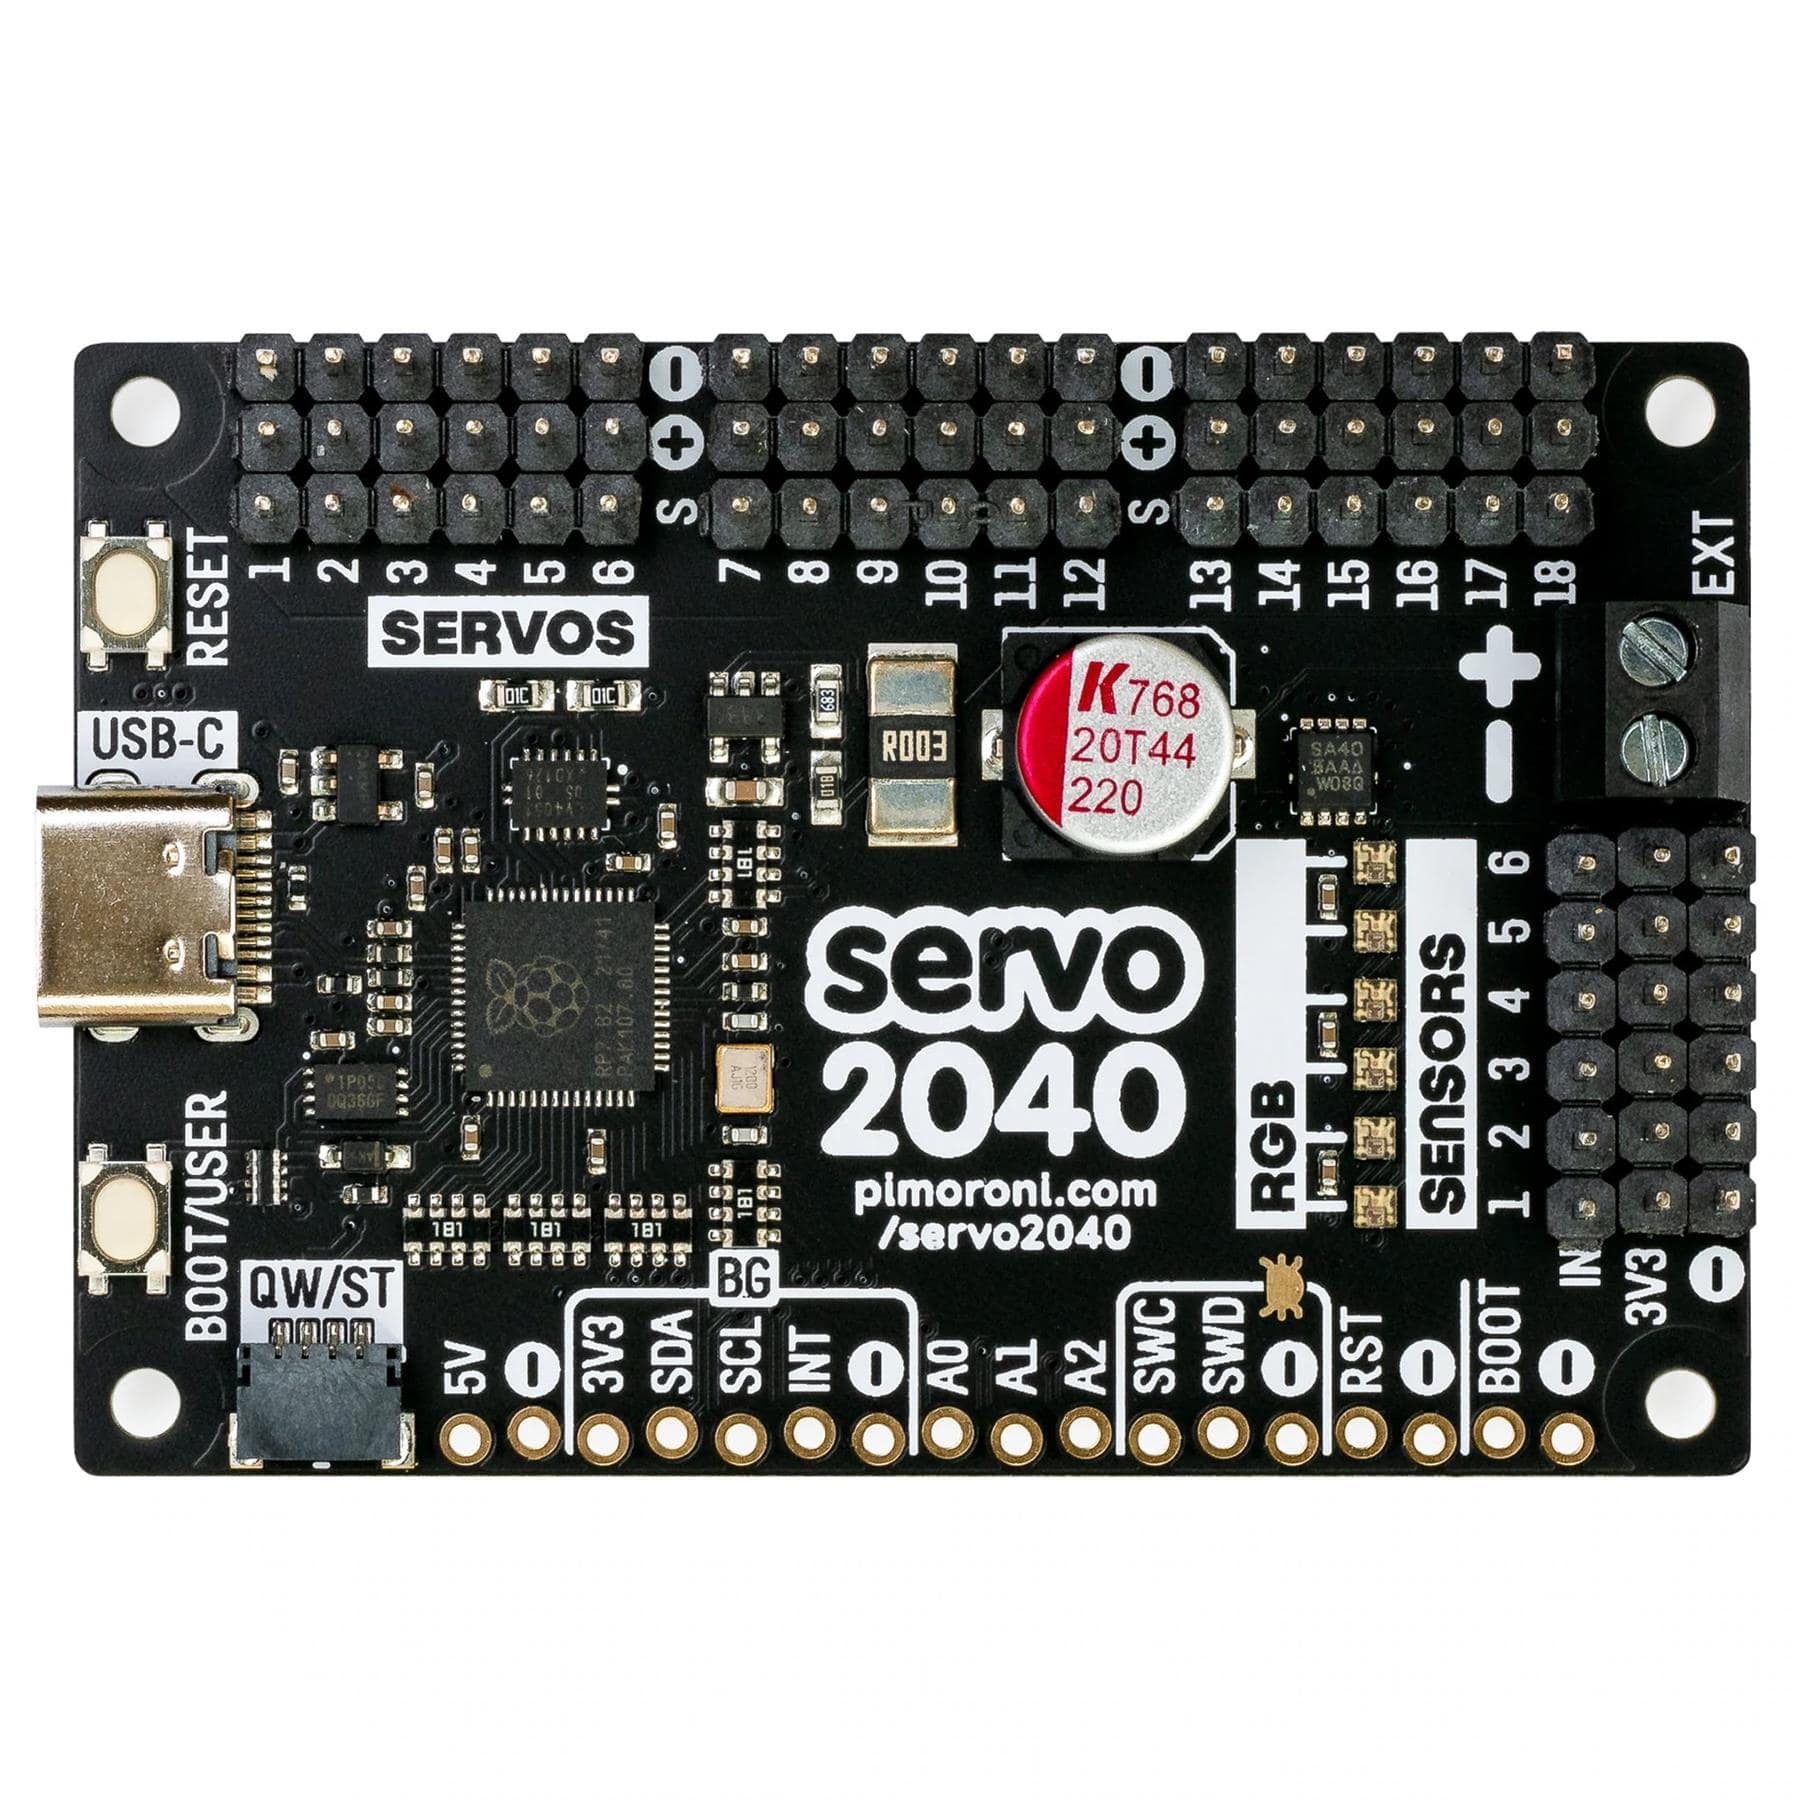 Servo 2040 - 18 Channel Servo Controller - The Pi Hut